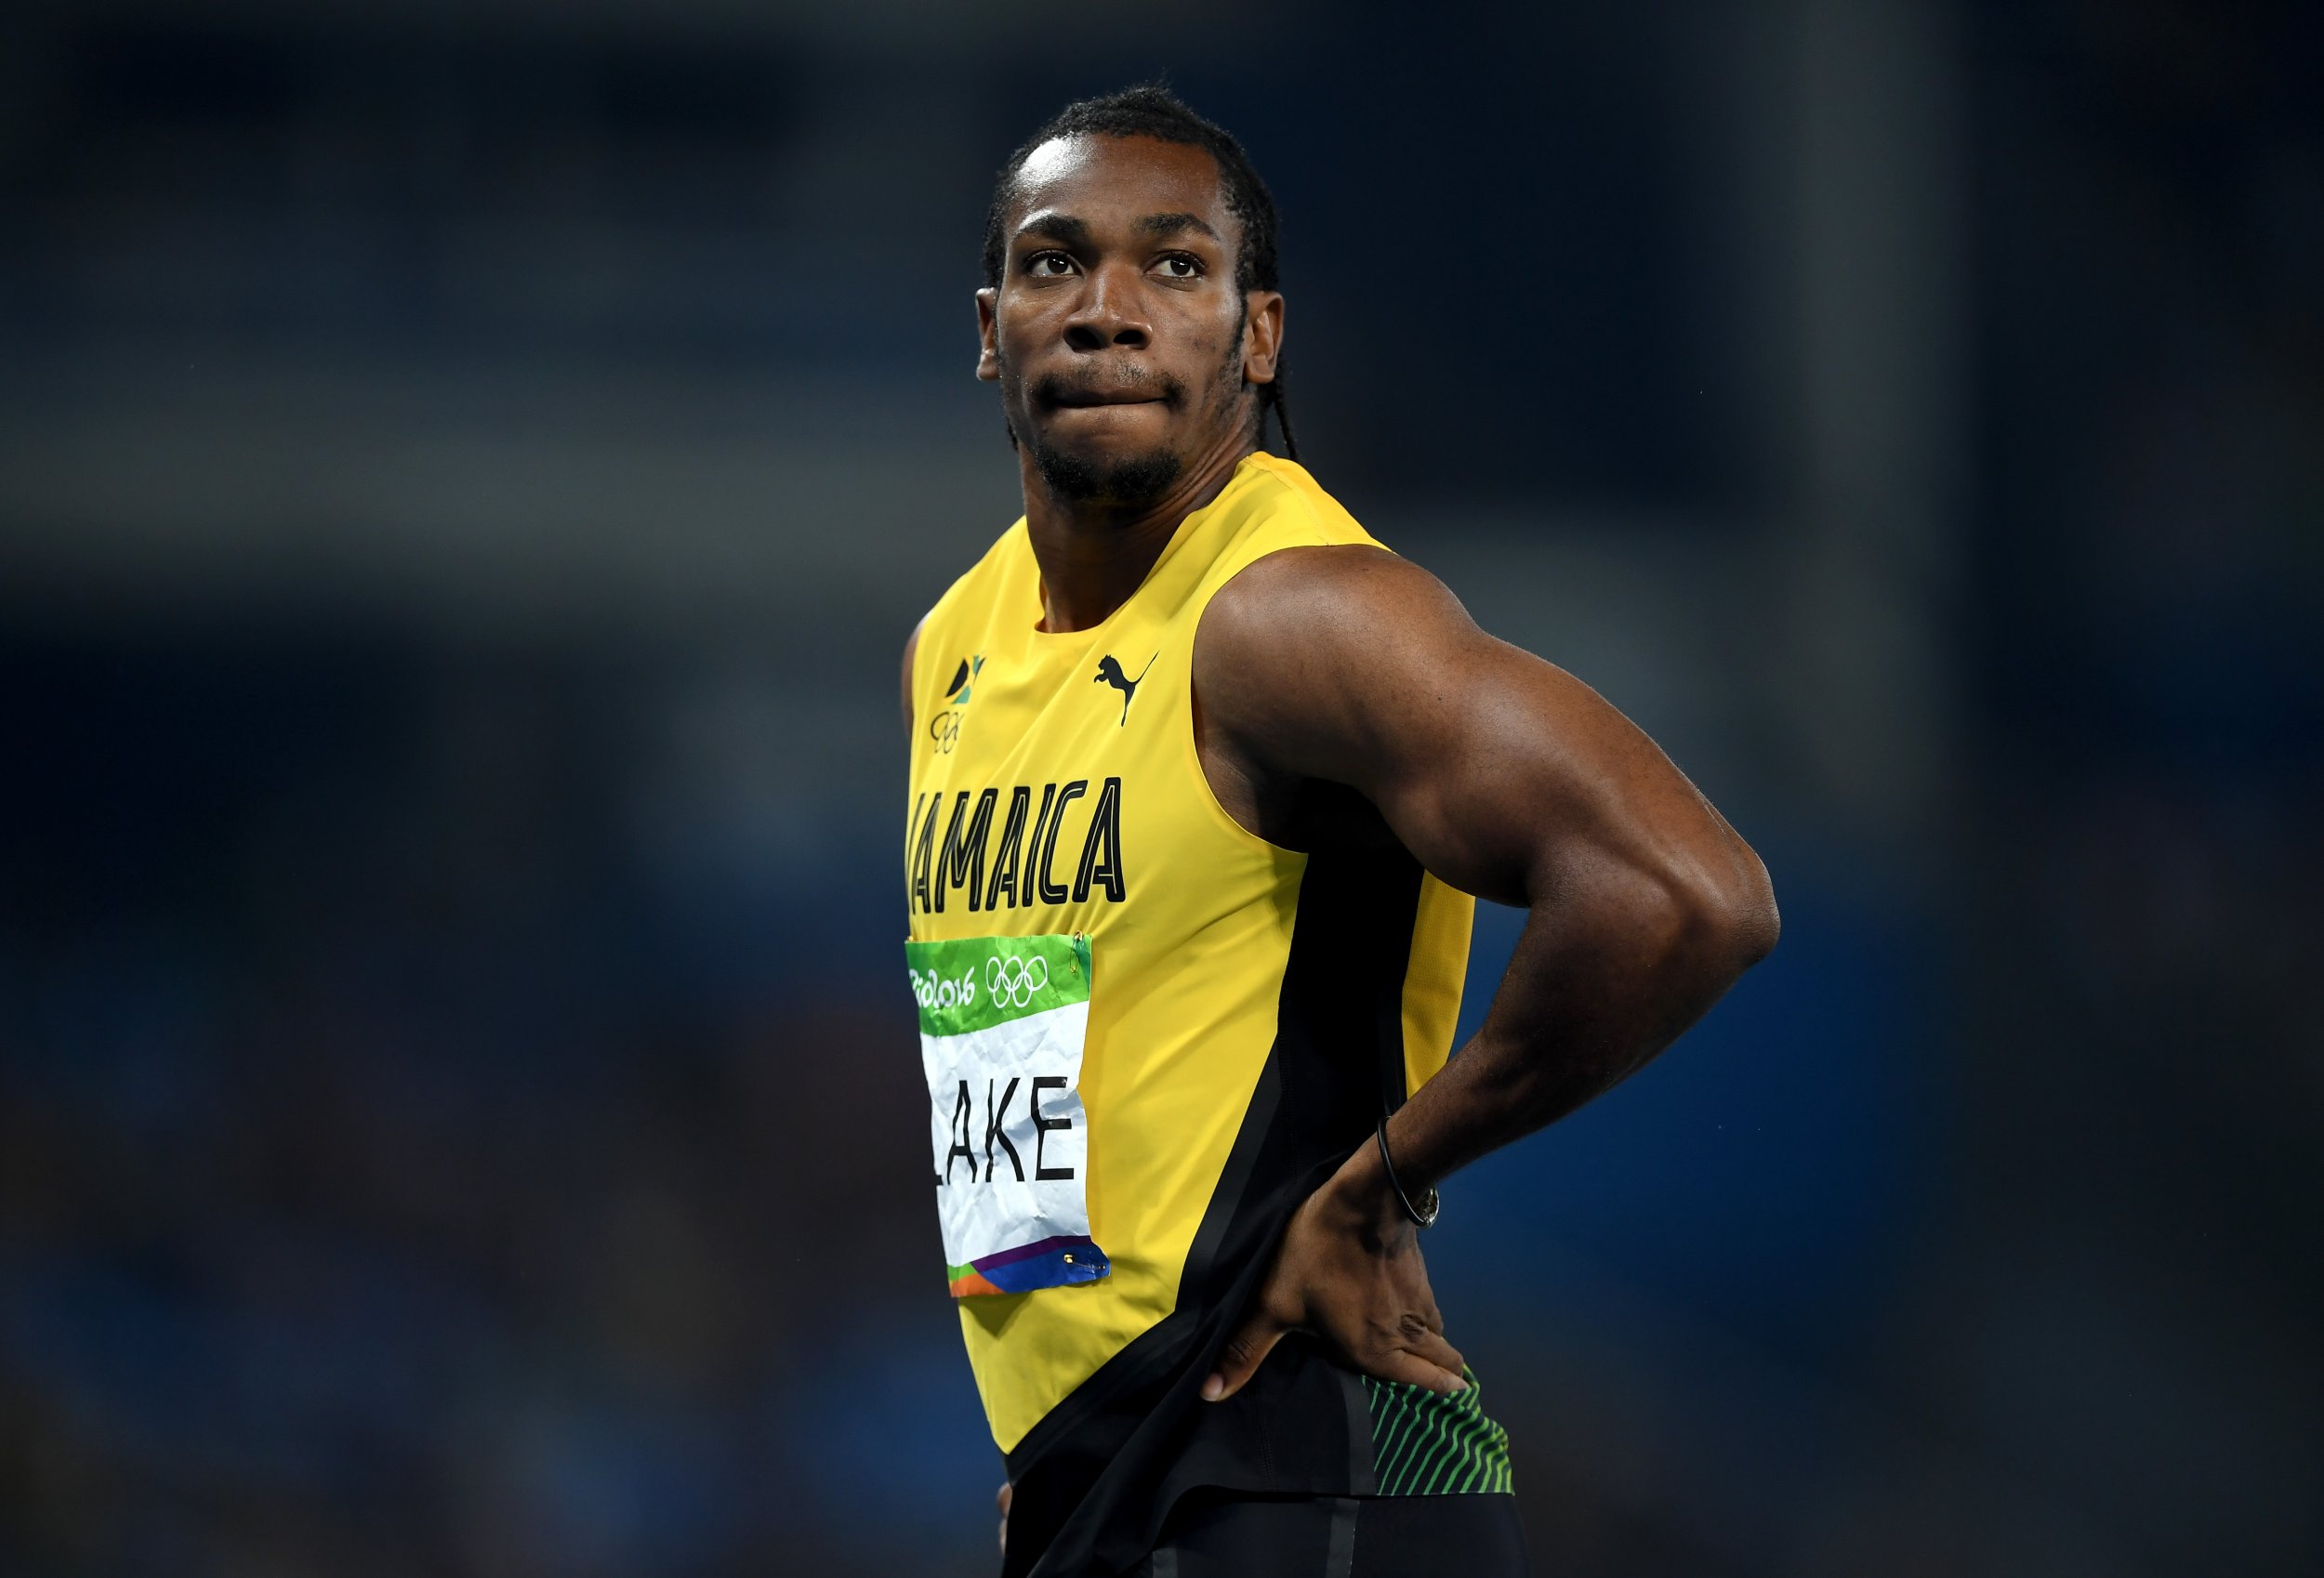 Jamaican sprinter Yohan Blake